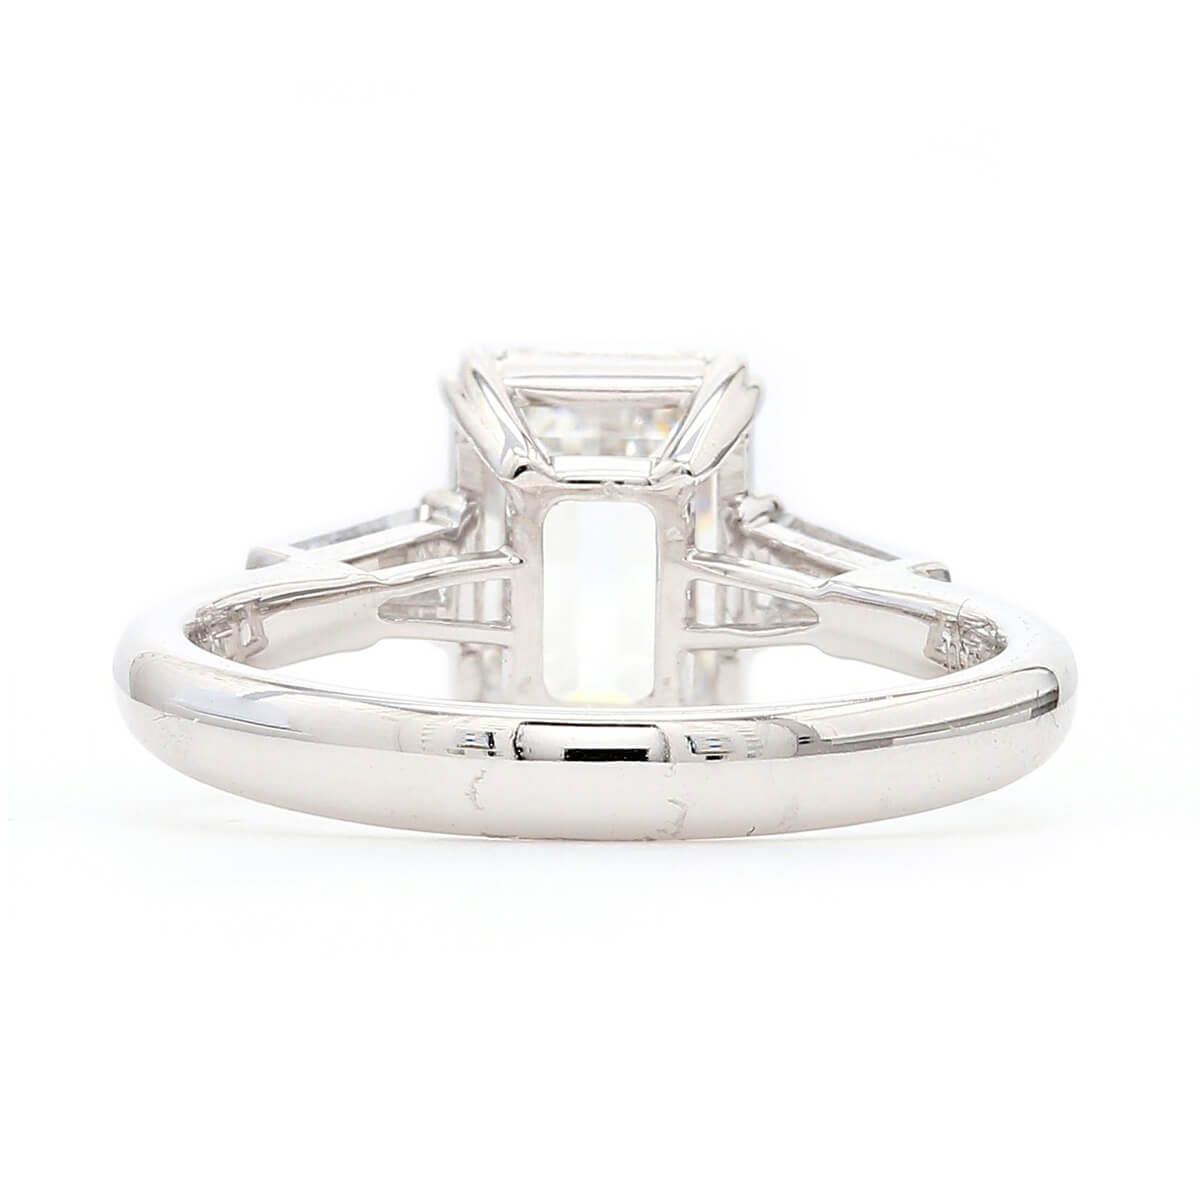  White Diamond Ring, 2.30 Ct. TW, Emerald shape, GIA Certified, 1156577980